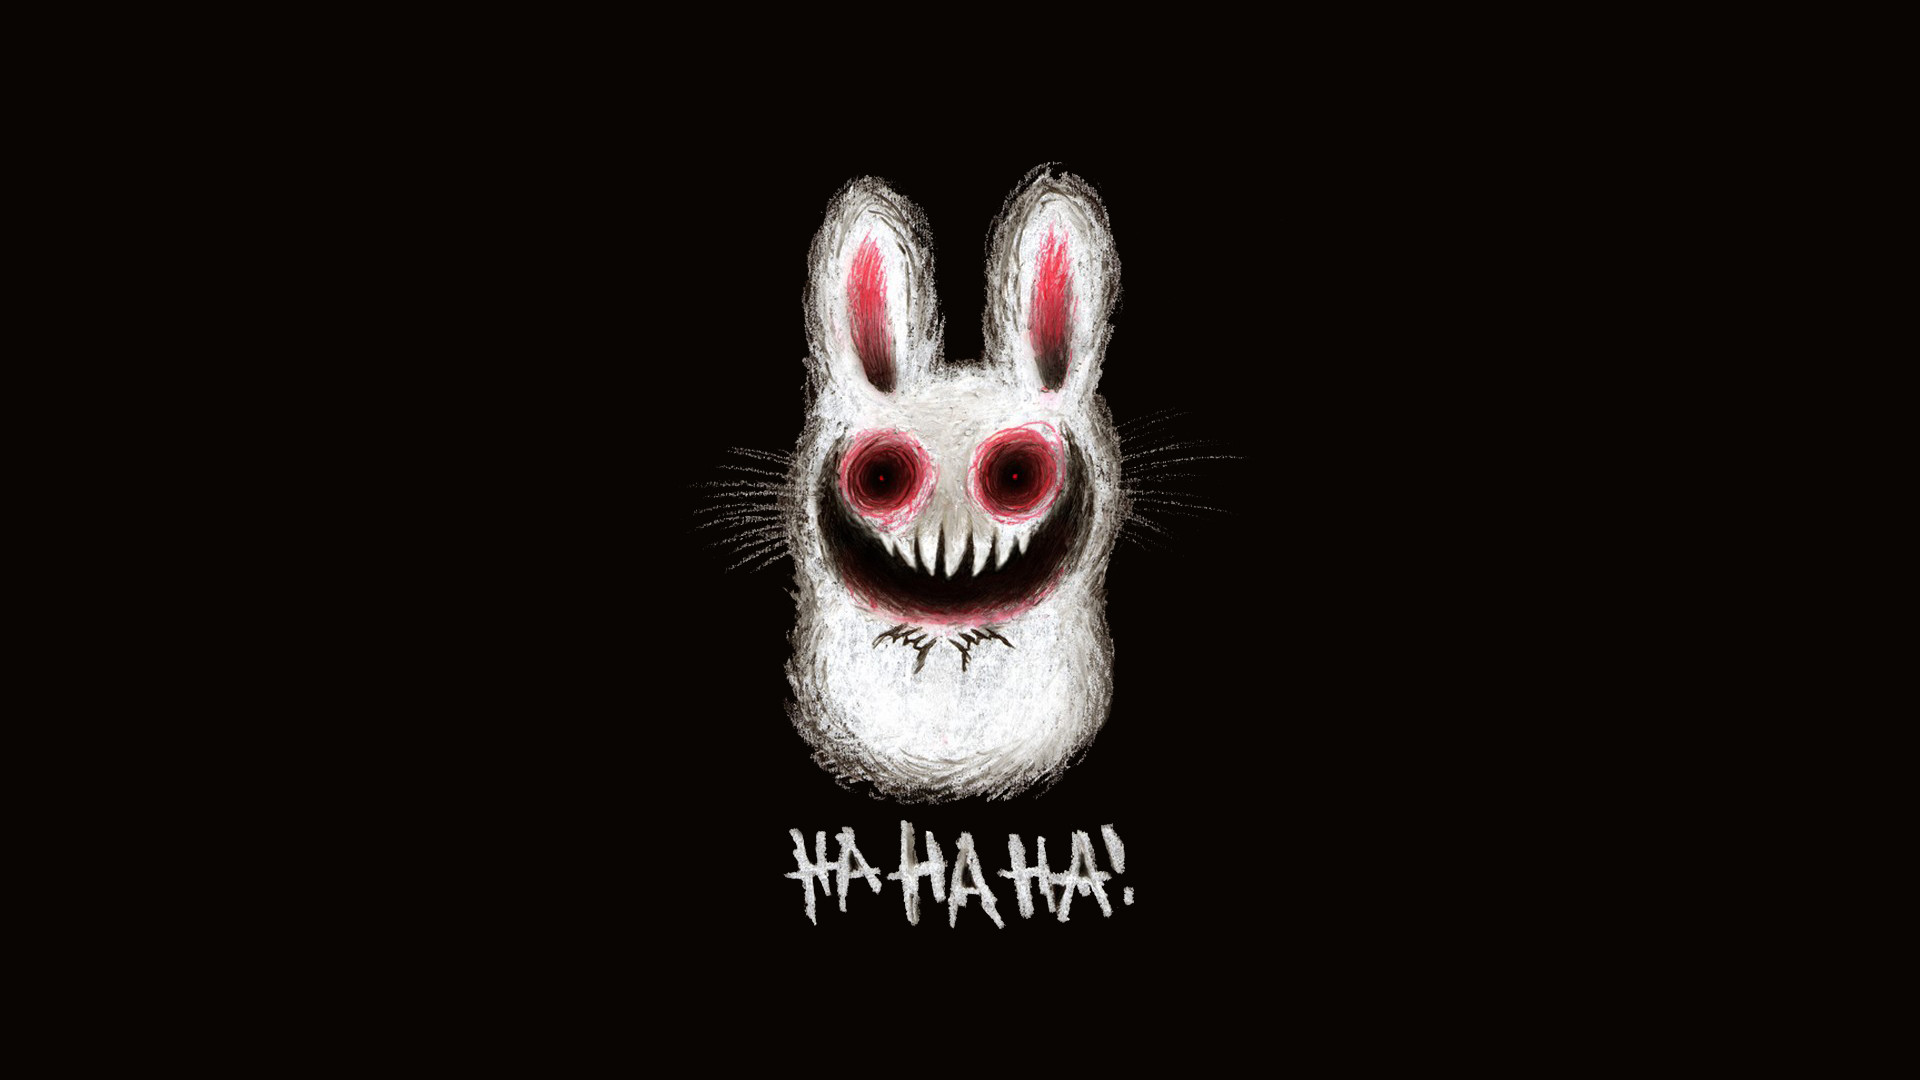 1920x1080 Creepy bunny wallpaper, cute adorable fluffy scary bunny rabbit .